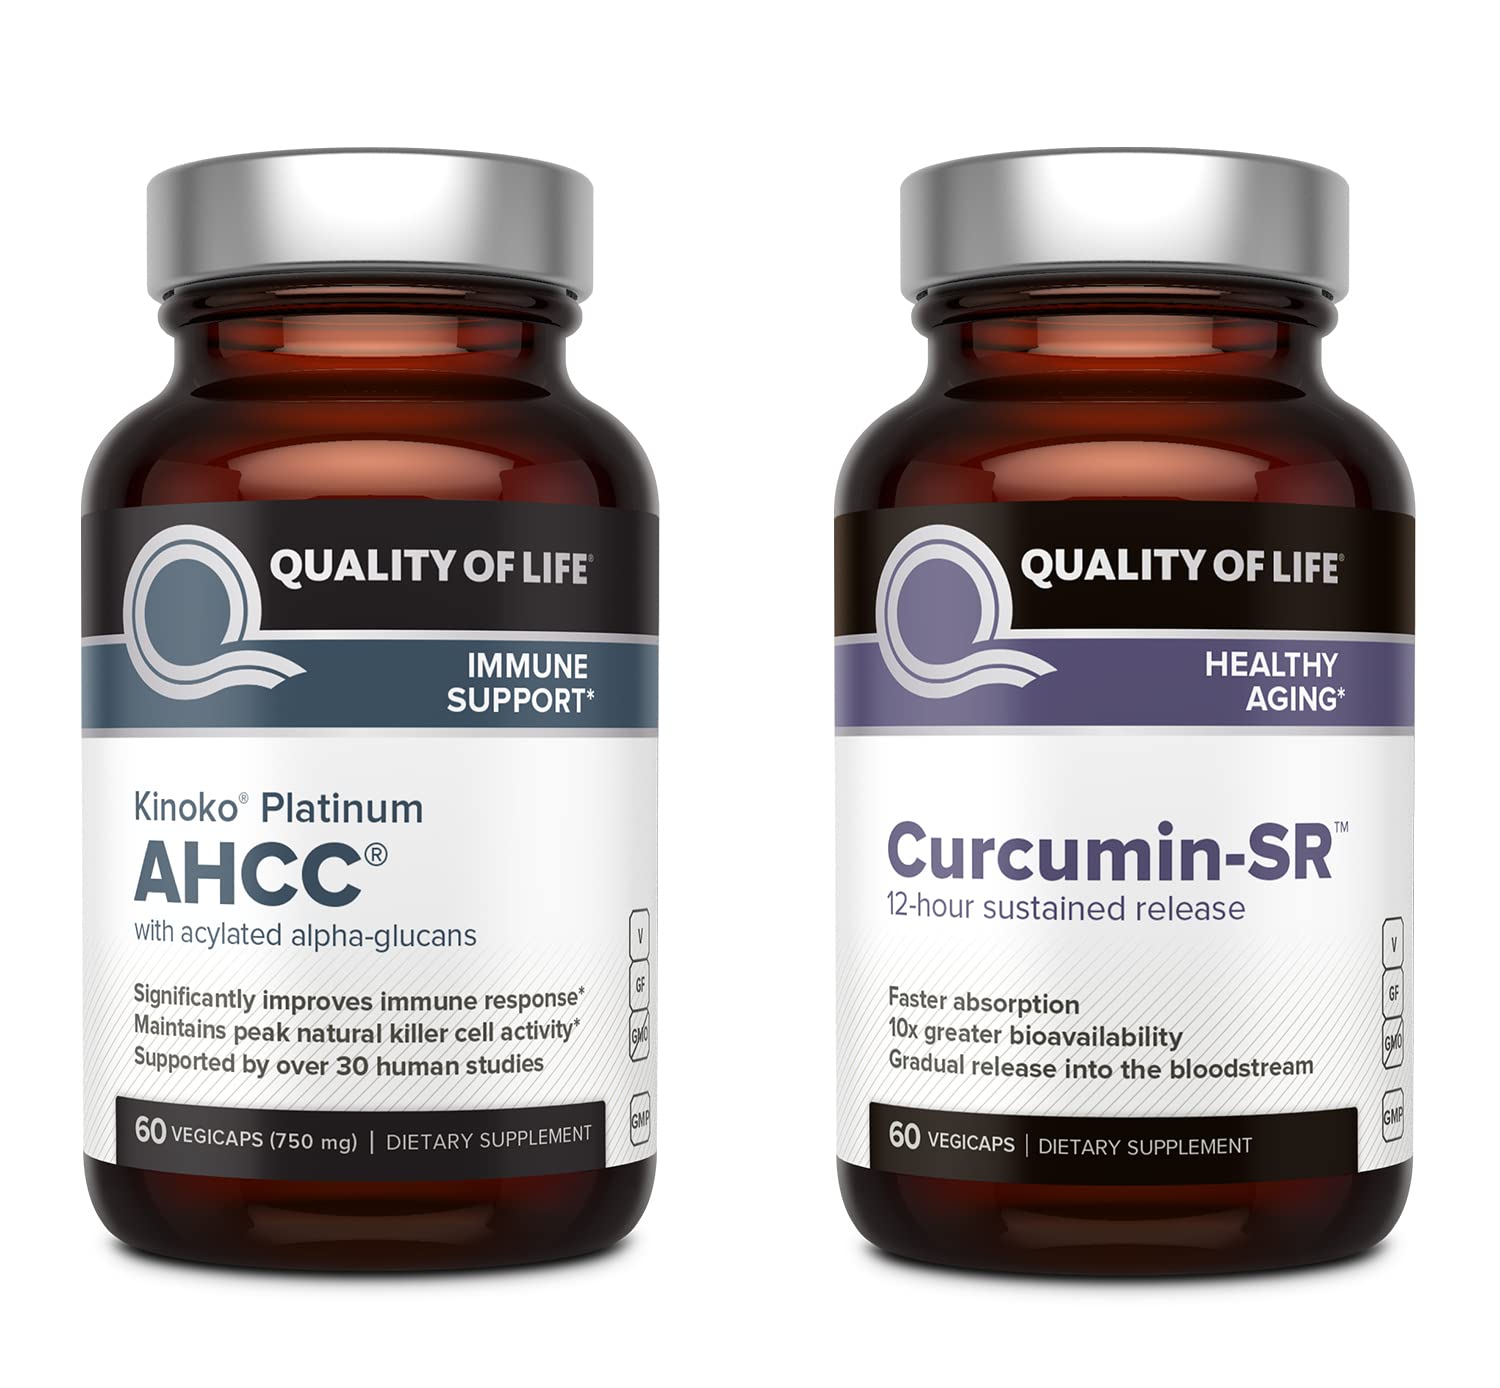 Quality of Life Immune Bundle - Fight Both with Kinoko Platinum AHCC Mushroom Extract and Microactive Curcumin SR